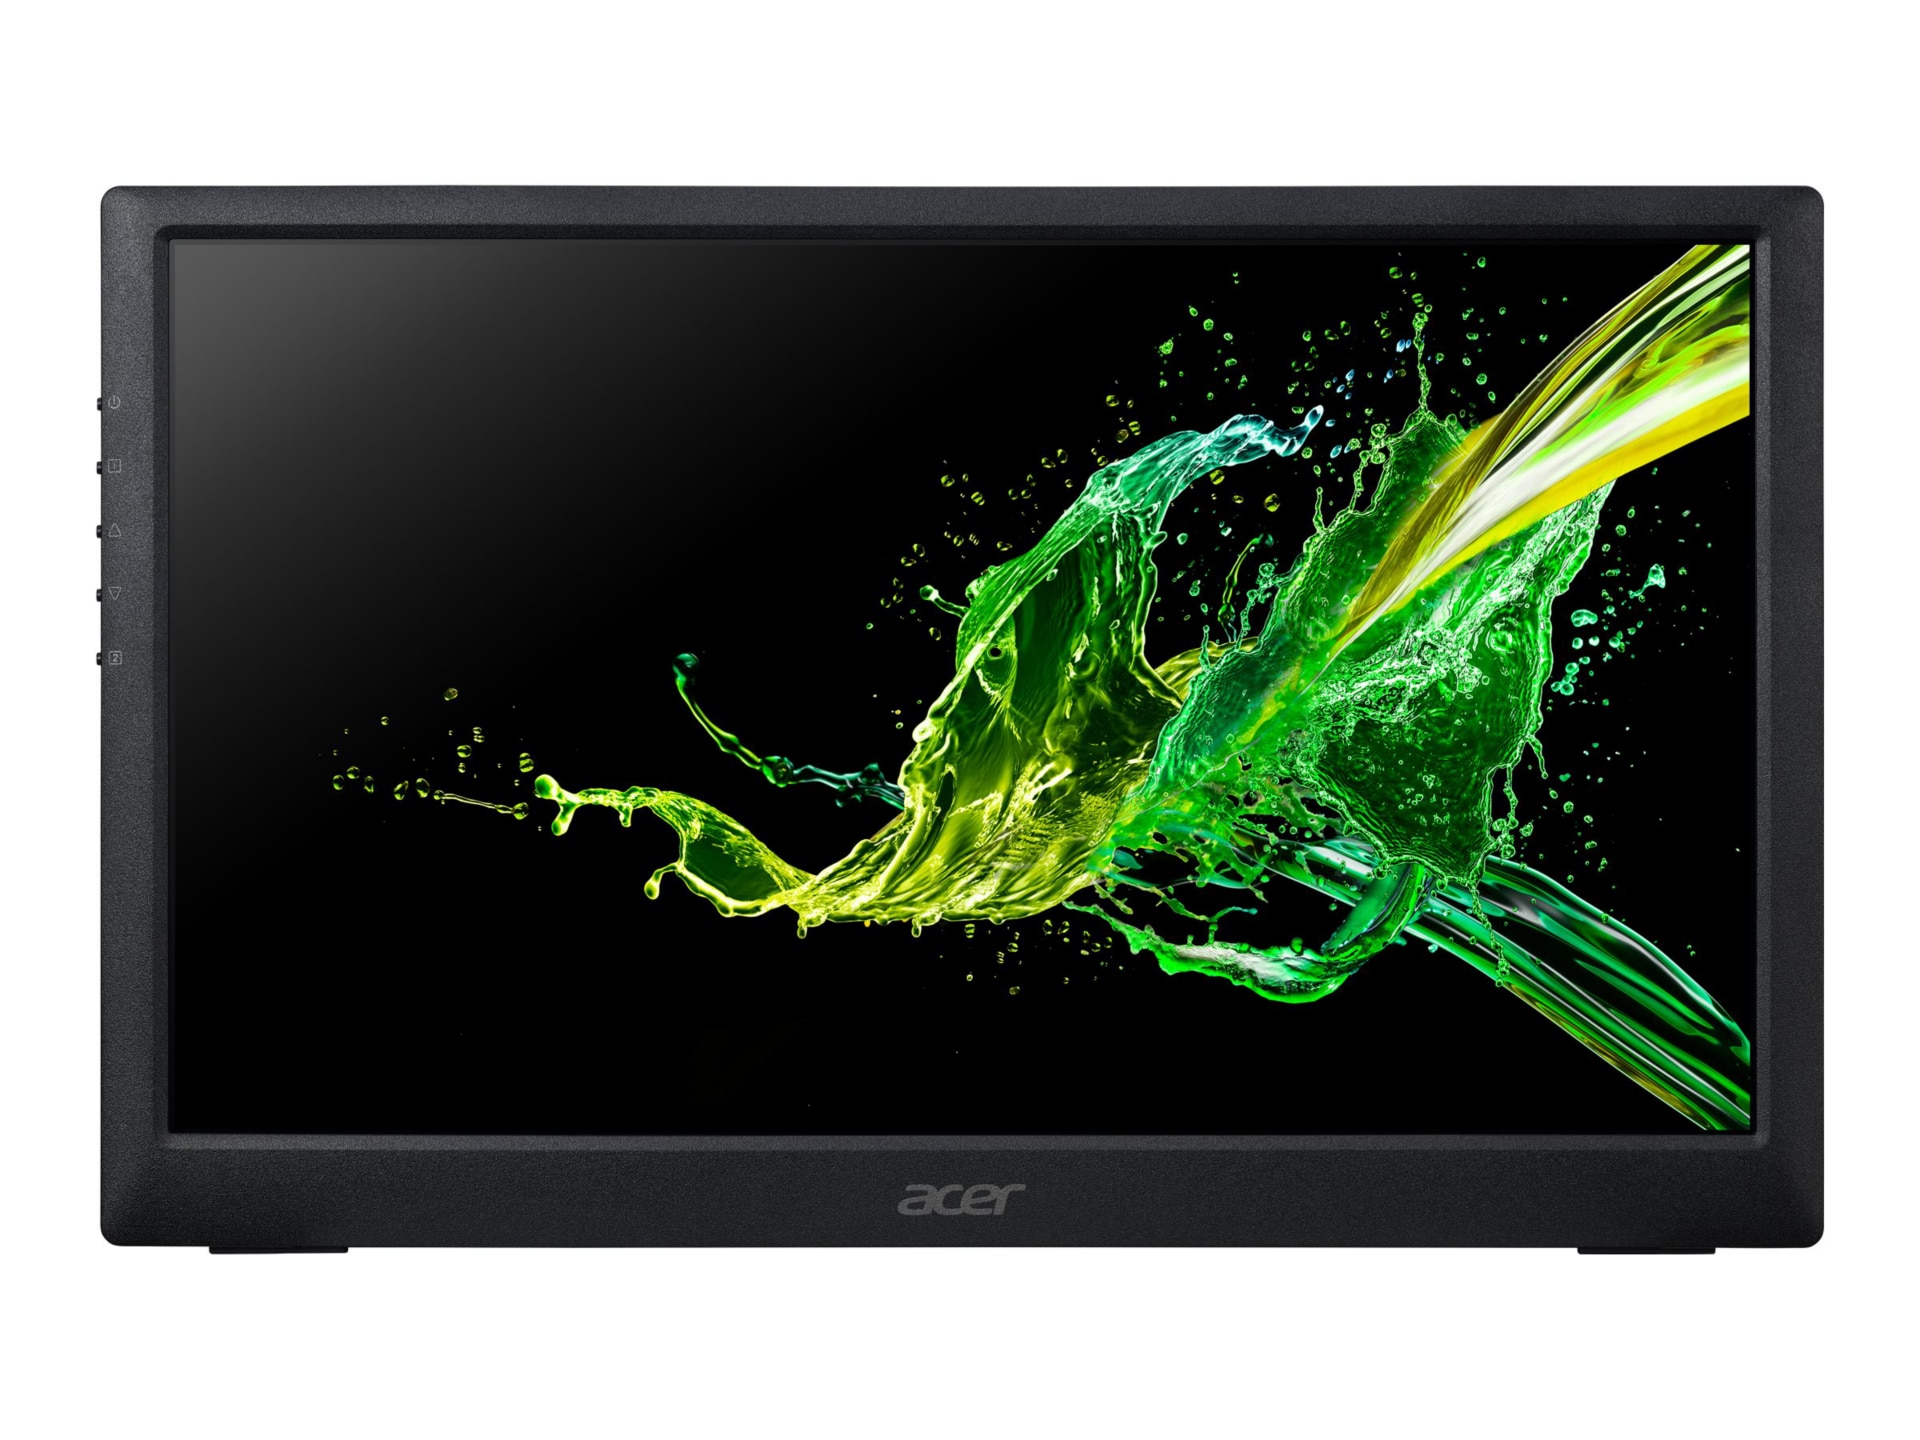 Acer PM161Q 15.6" Full HD 1920x1080 LCD Monitor